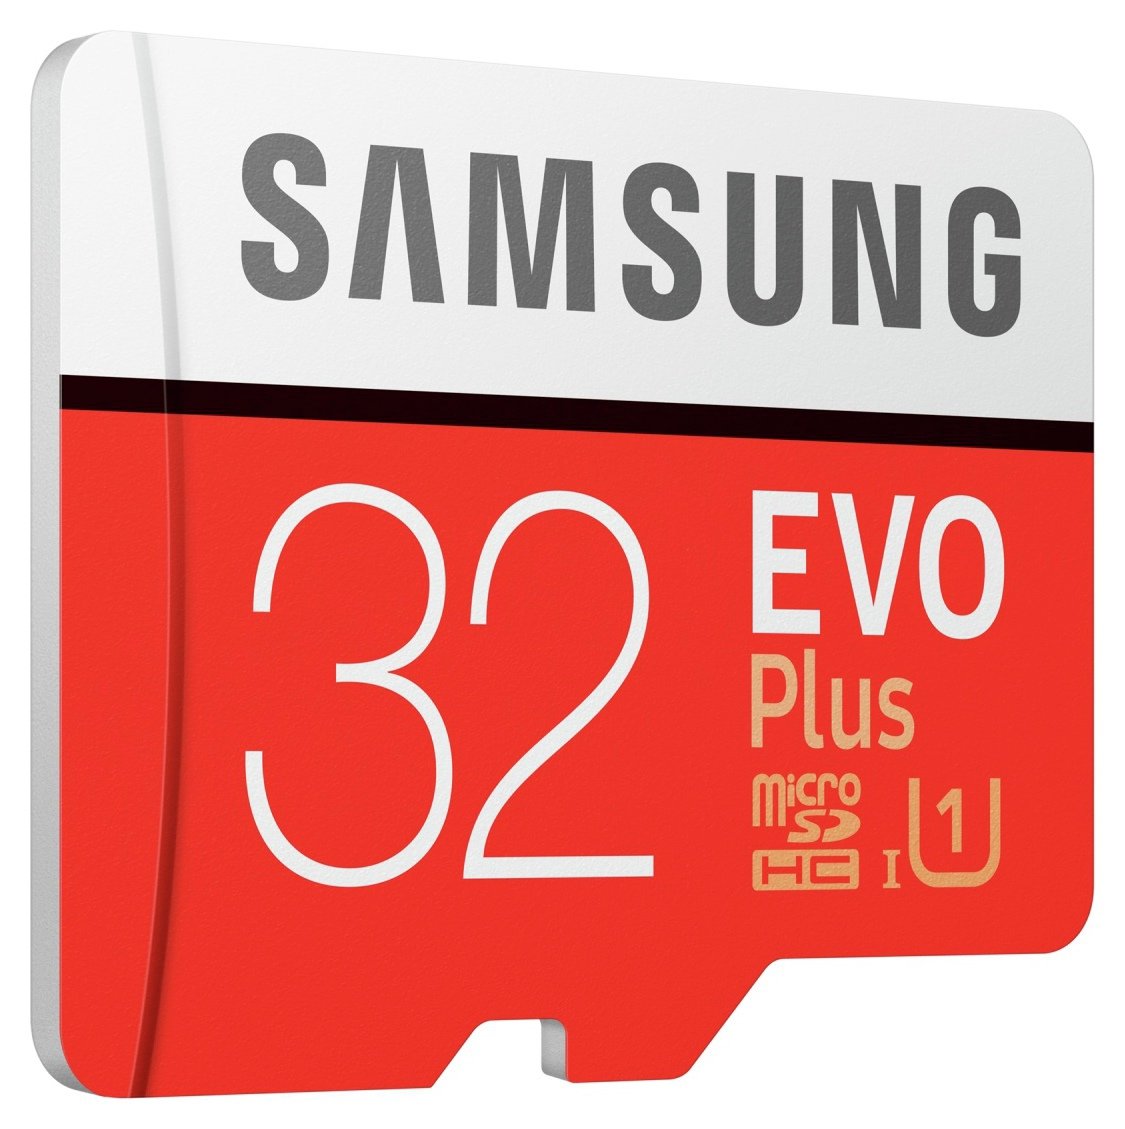 Samsung EVO Plus 95MBs Micro SDHC Memory Card Review